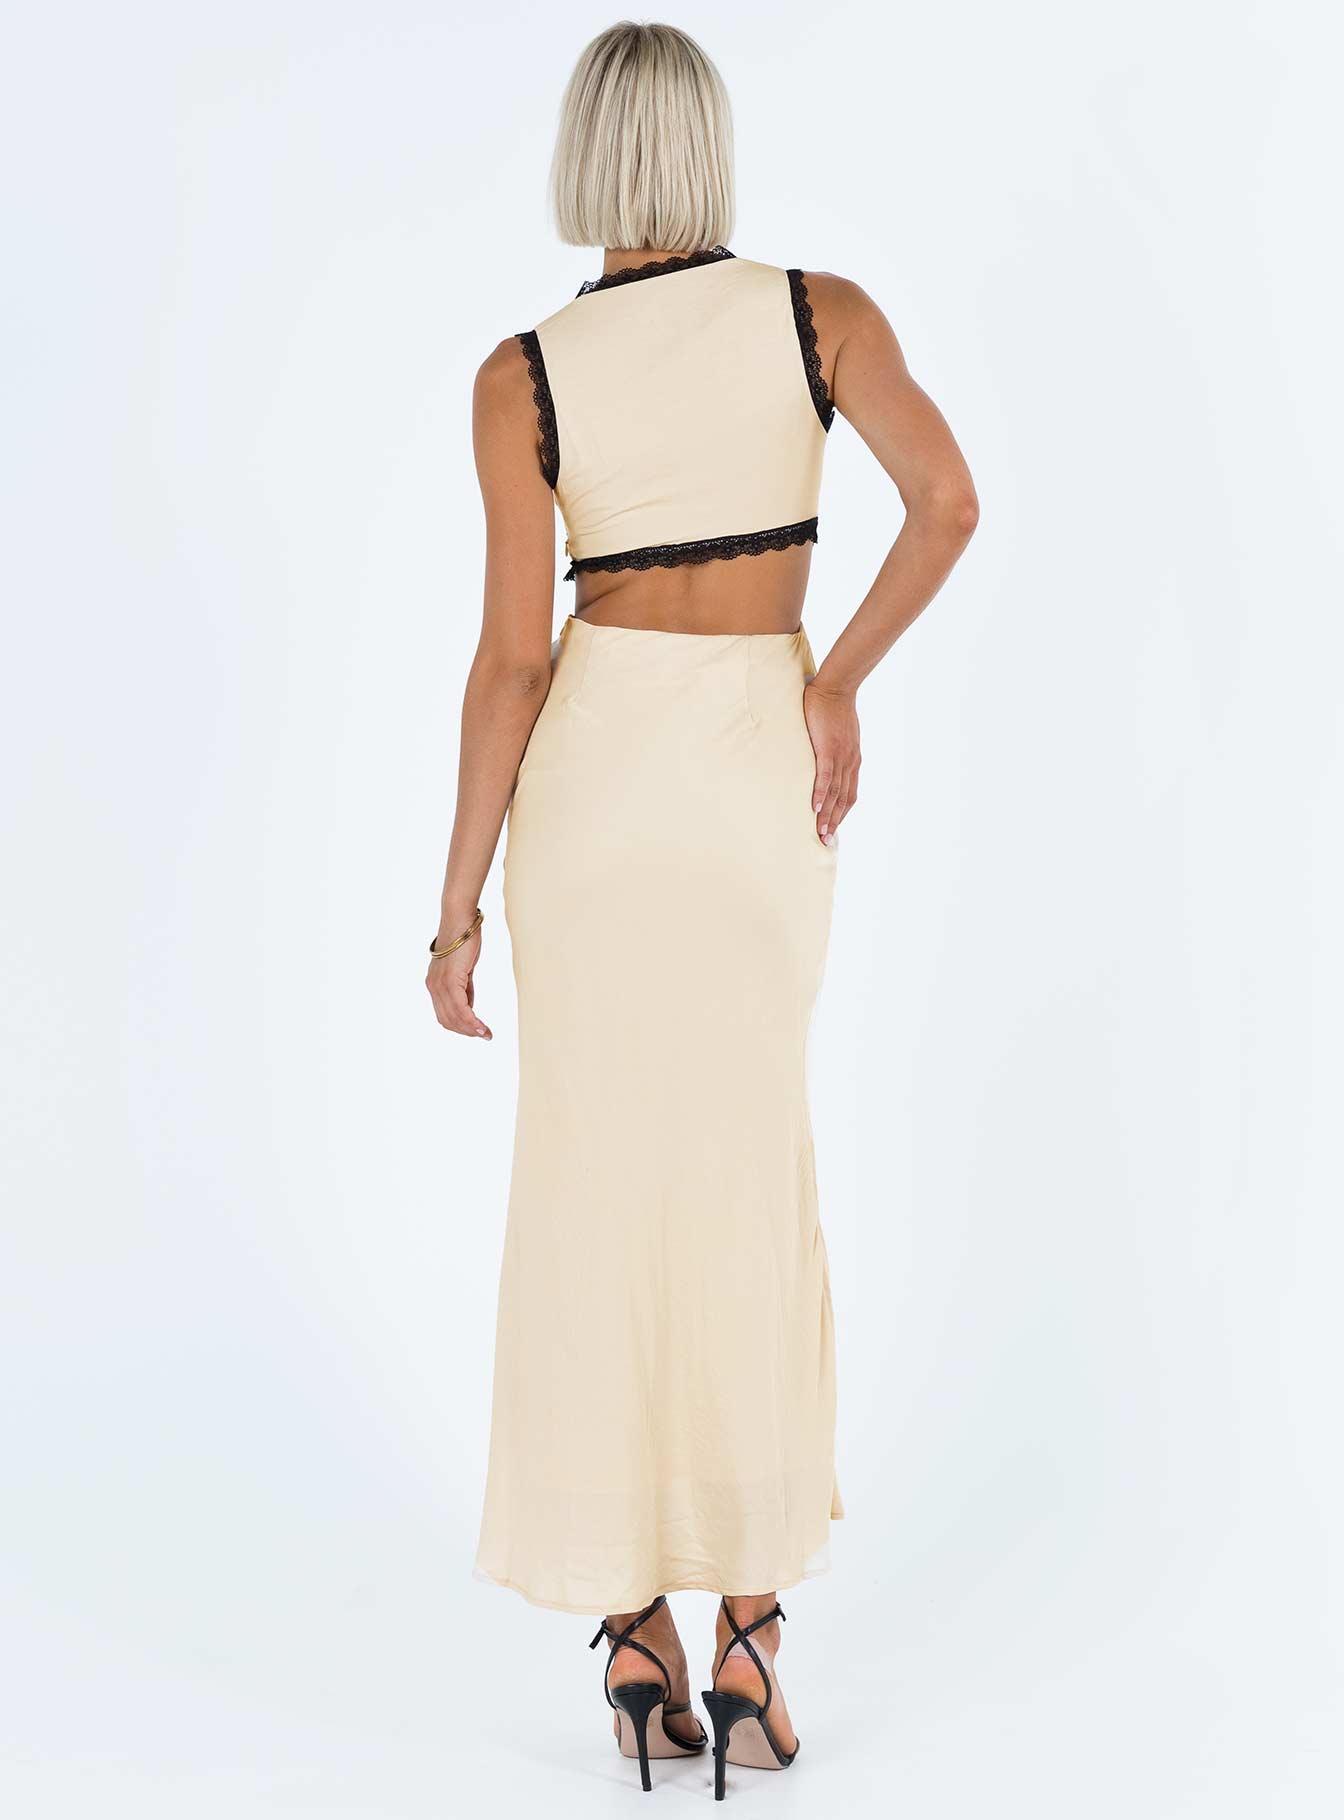 Shop Formal Dress - Keila Lace Trim Maxi Dress Cream / Black secondary image